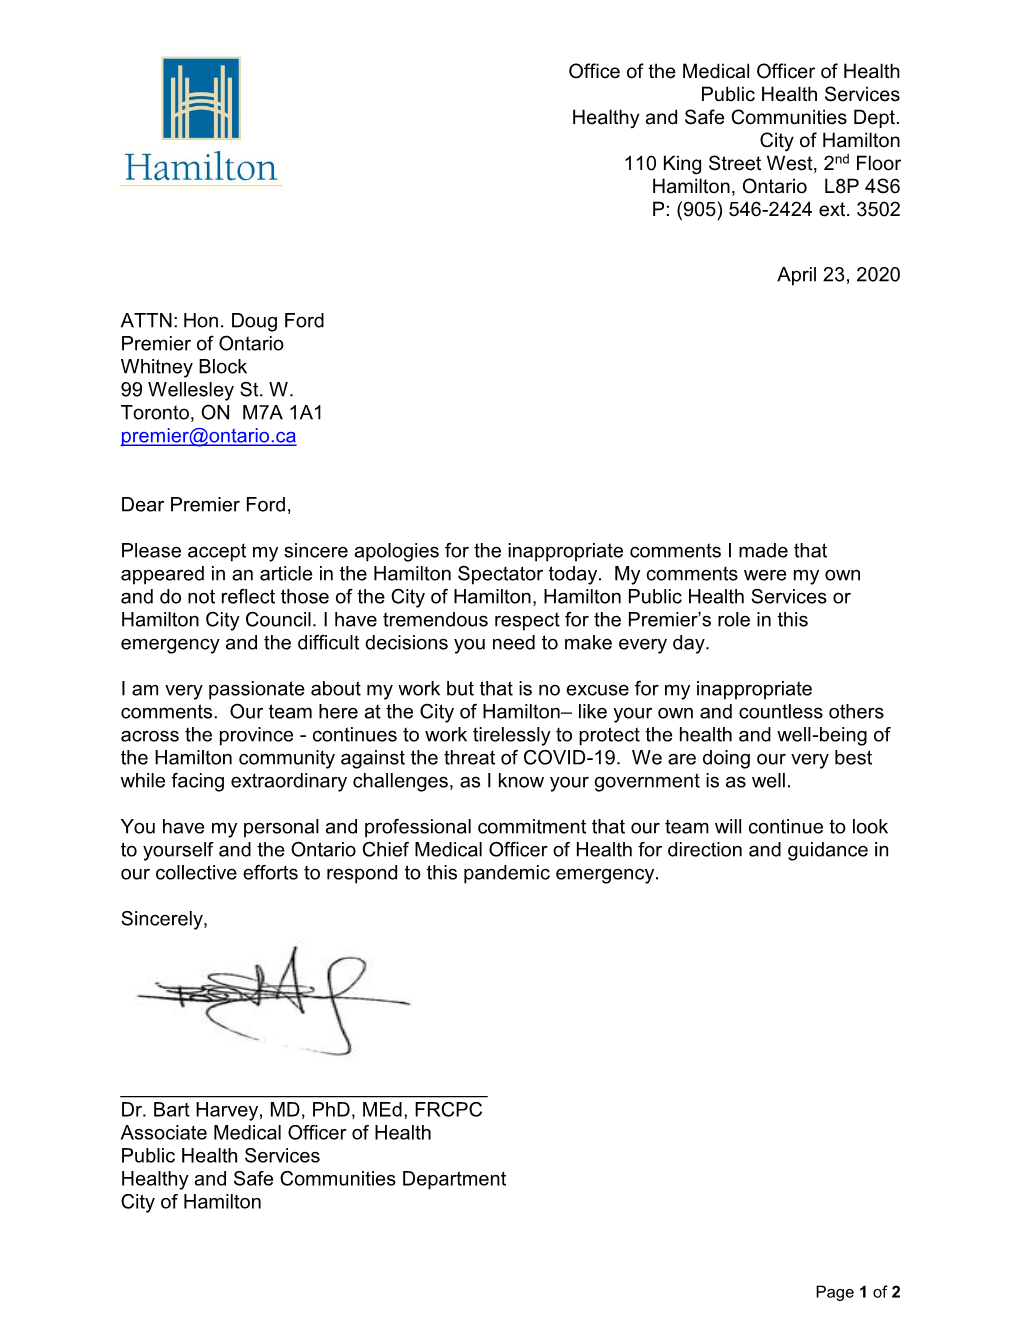 Letter to Premier Doug Ford from Dr. Bart Harvey, Associate Medical